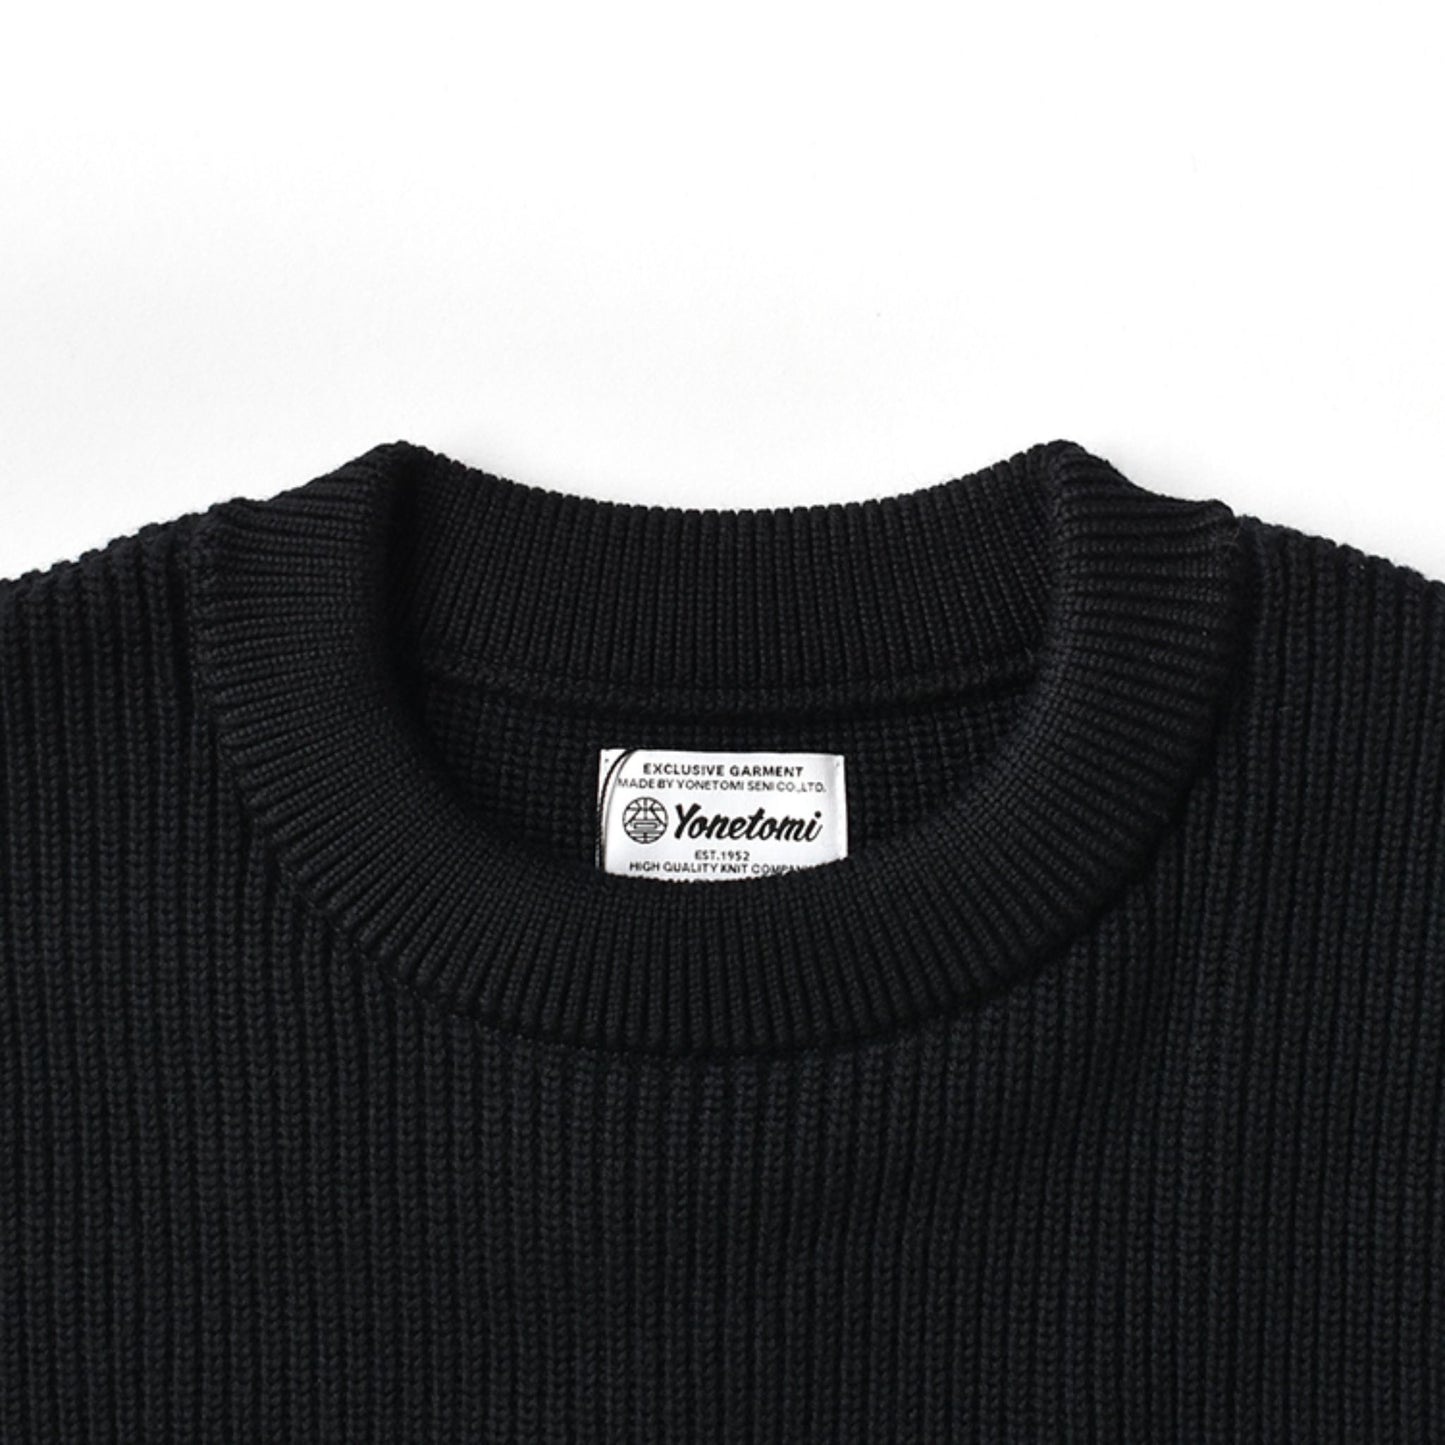 YONETOMI - Ex Fine Wool Rib Knit Pull Over Black